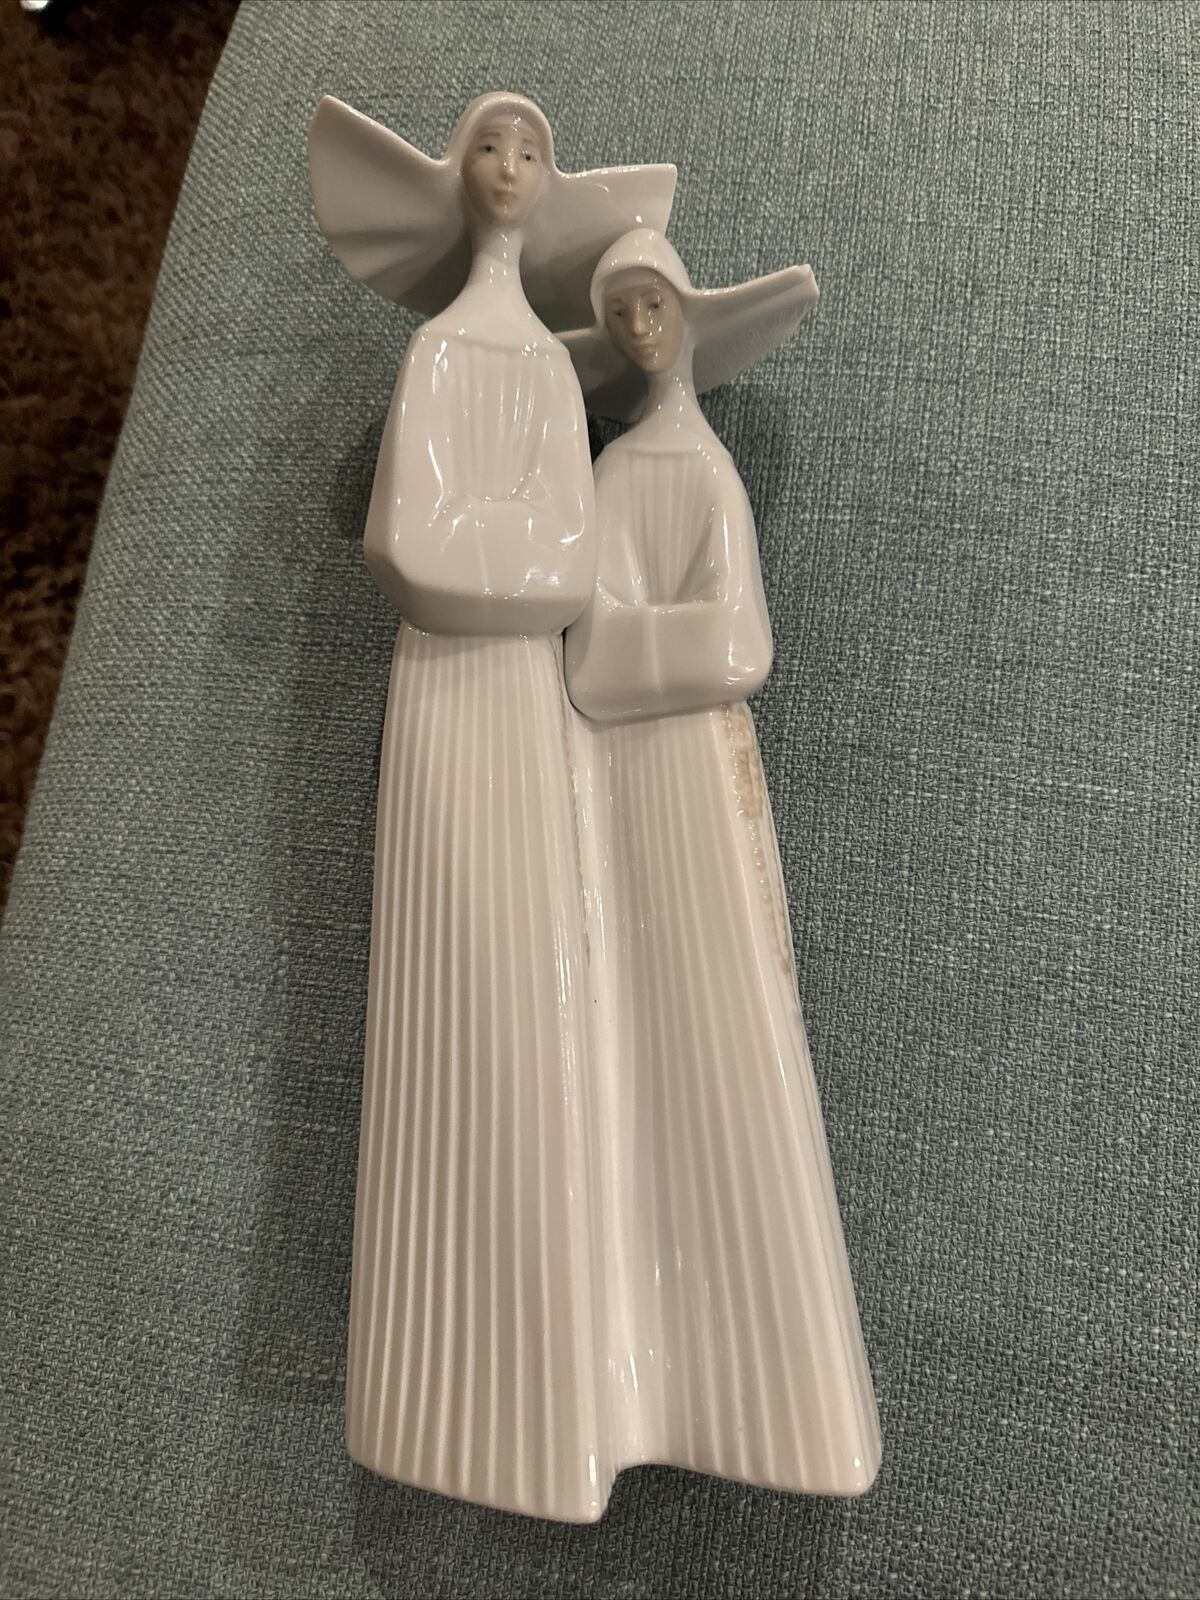 Lladro Porcelain Figurine of Two Nuns #4611 